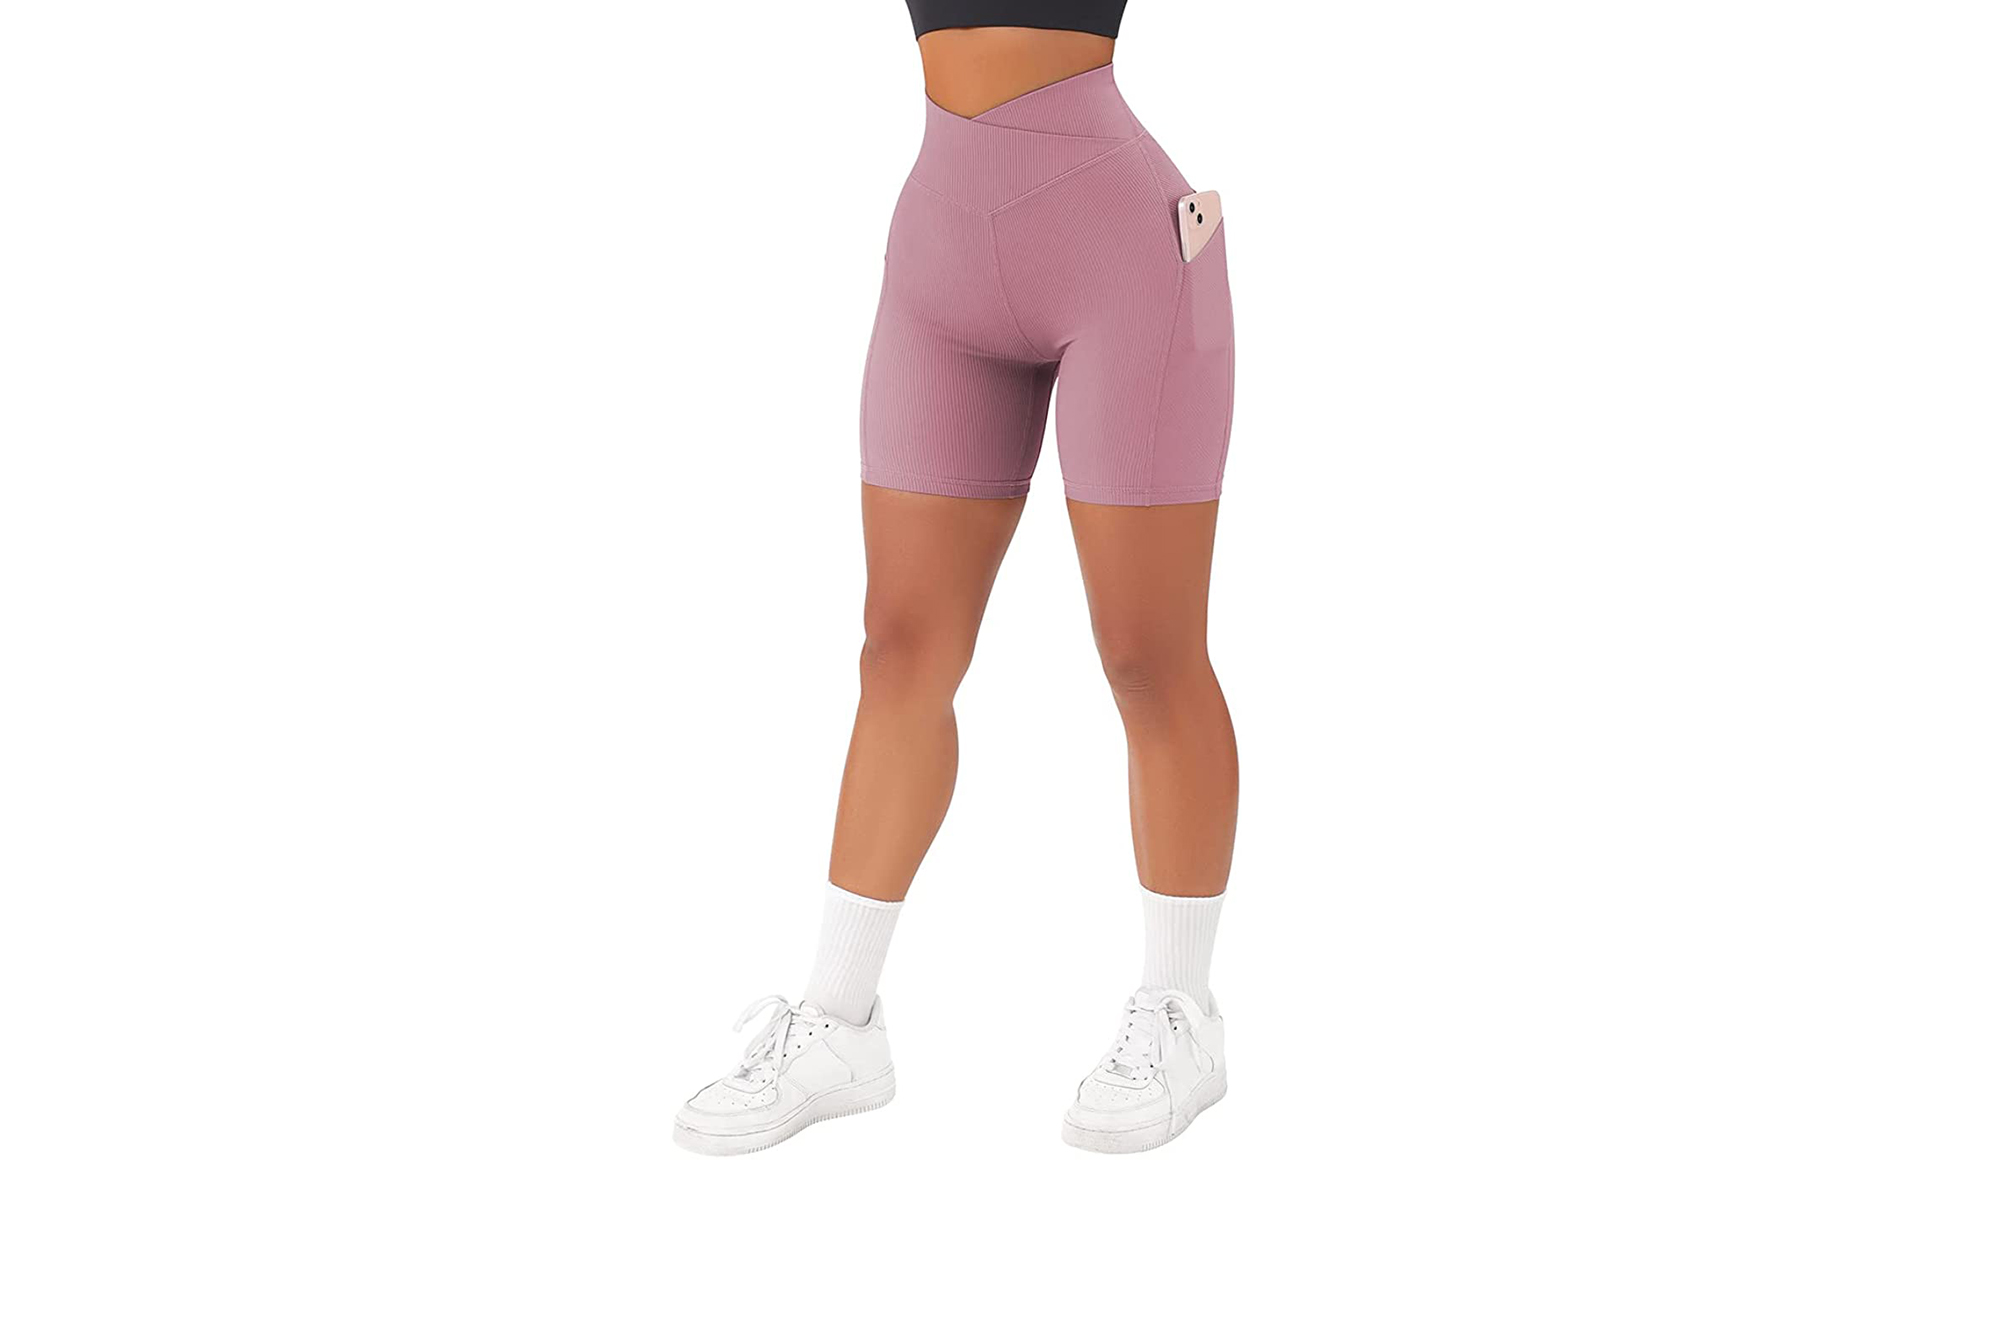 https://www.usmagazine.com/wp-content/uploads/2022/04/pink-shorts.jpg?quality=86&strip=all